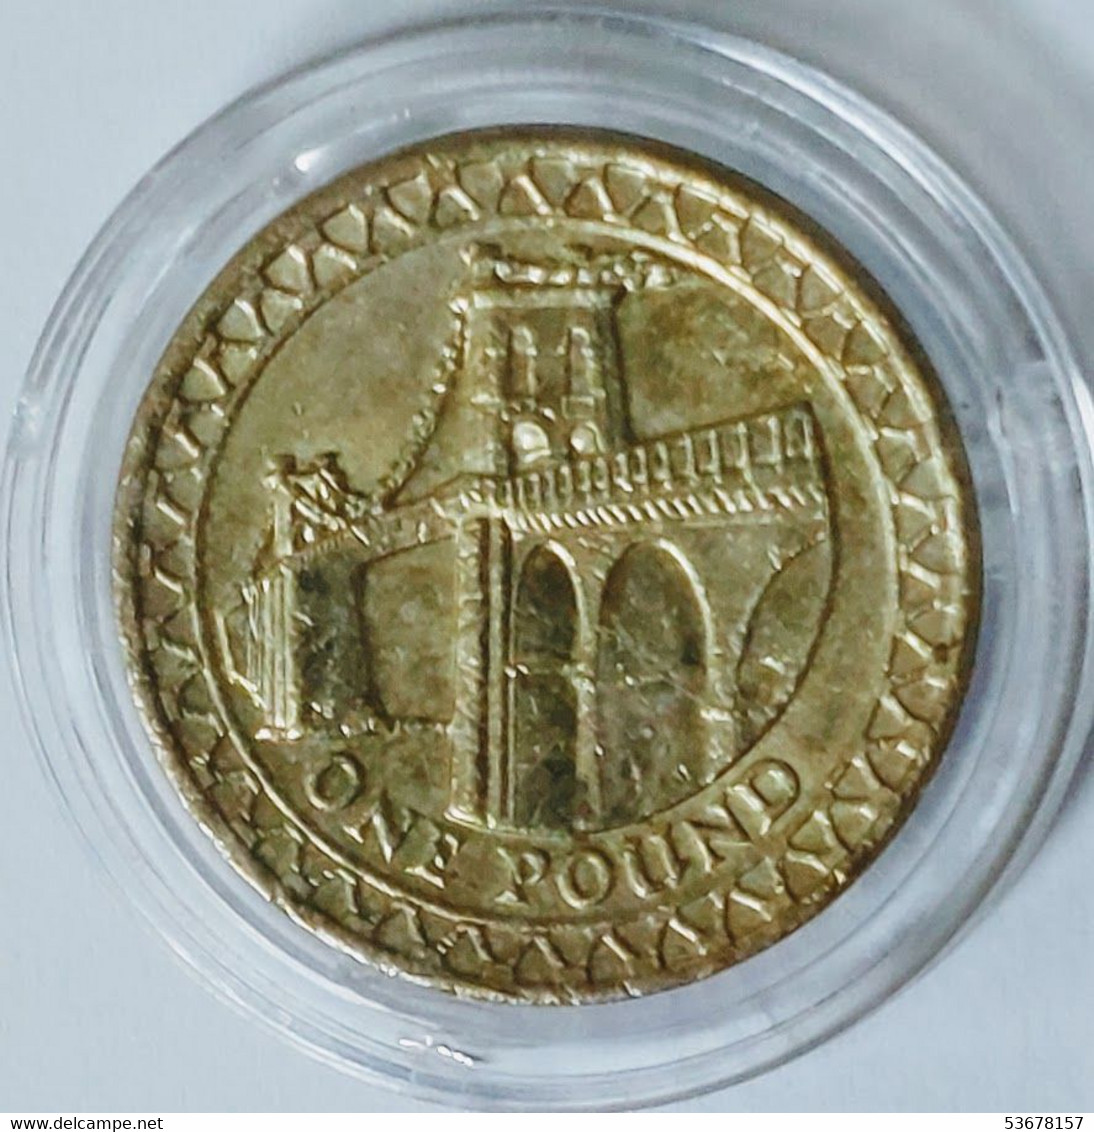 United Kingdom - 1 Pound, 2005, Menai Suspension Bridge, KM# 1051 - 1 Pound